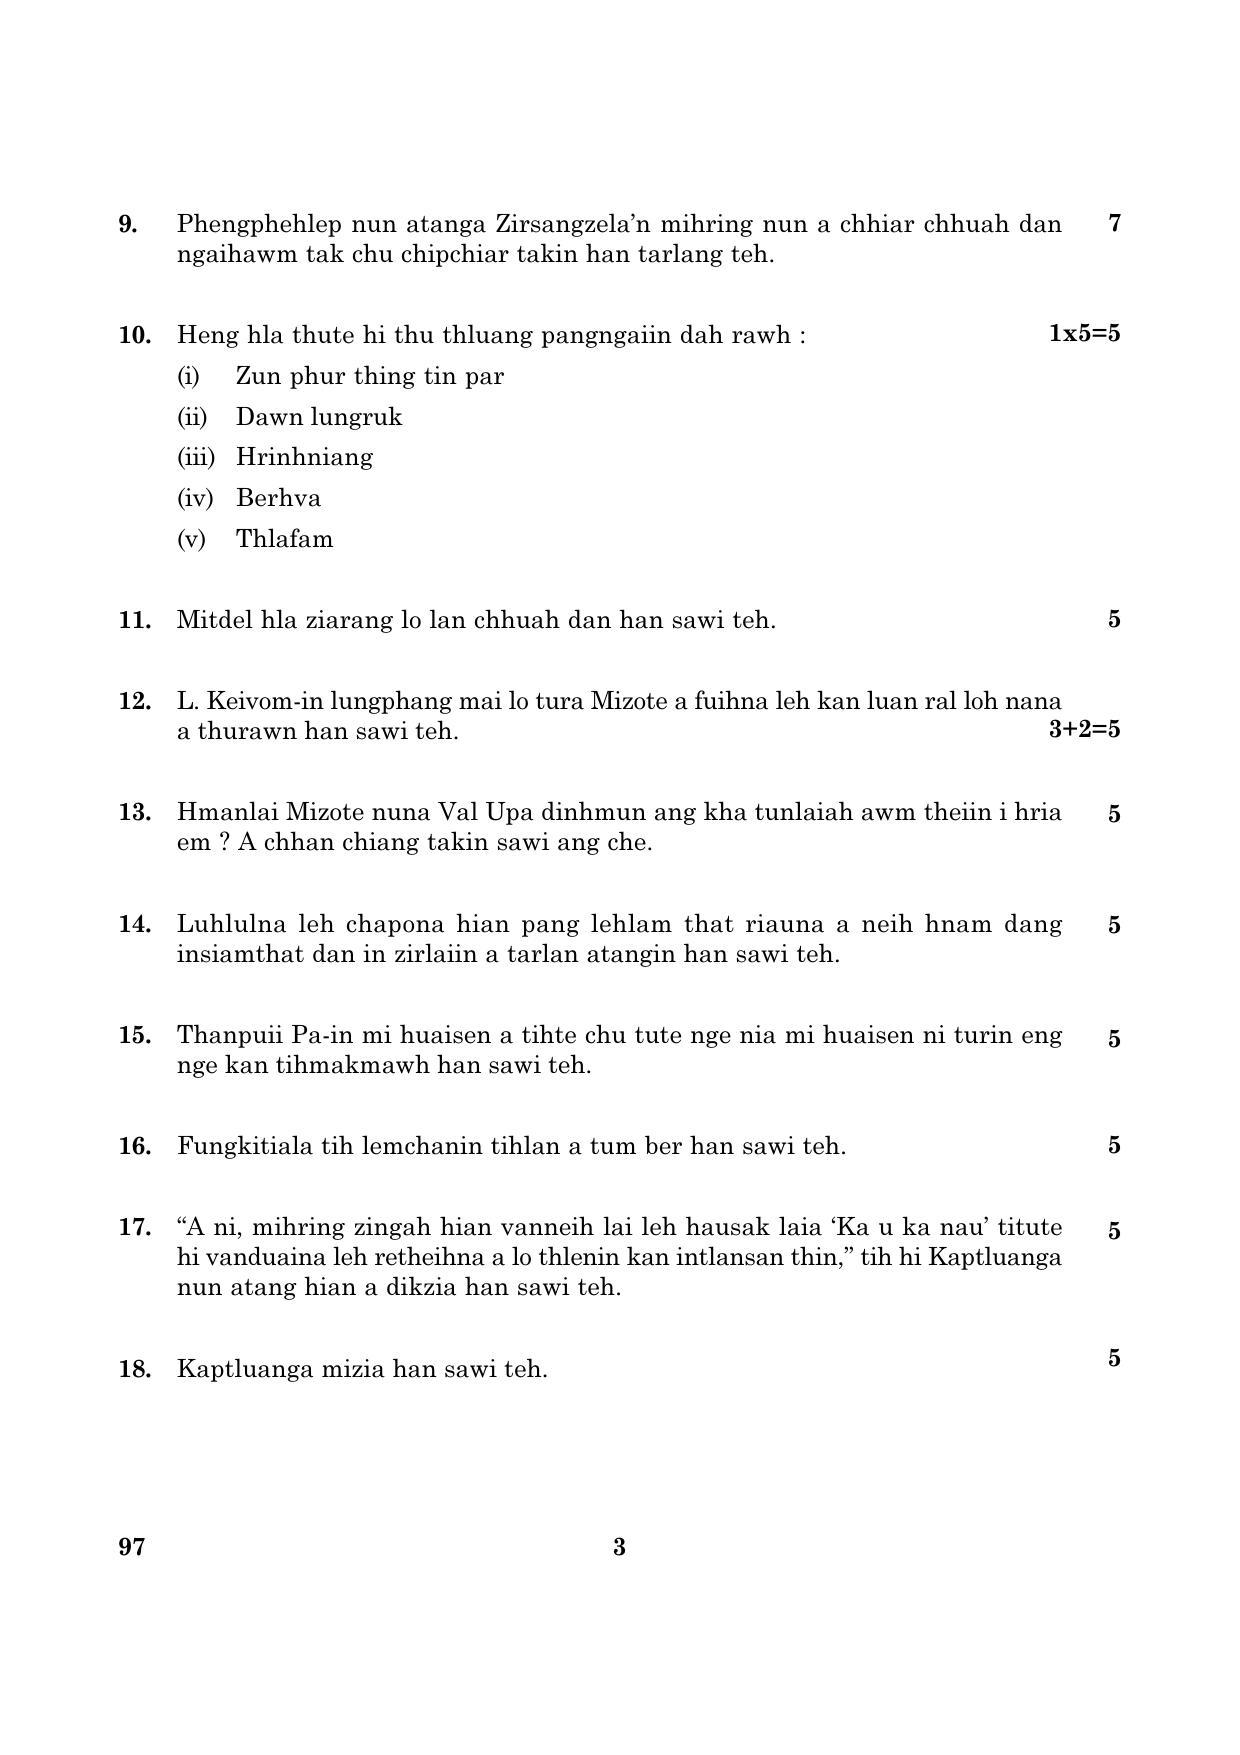 CBSE Class 12 097 MIZO 2016 Question Paper - Page 3